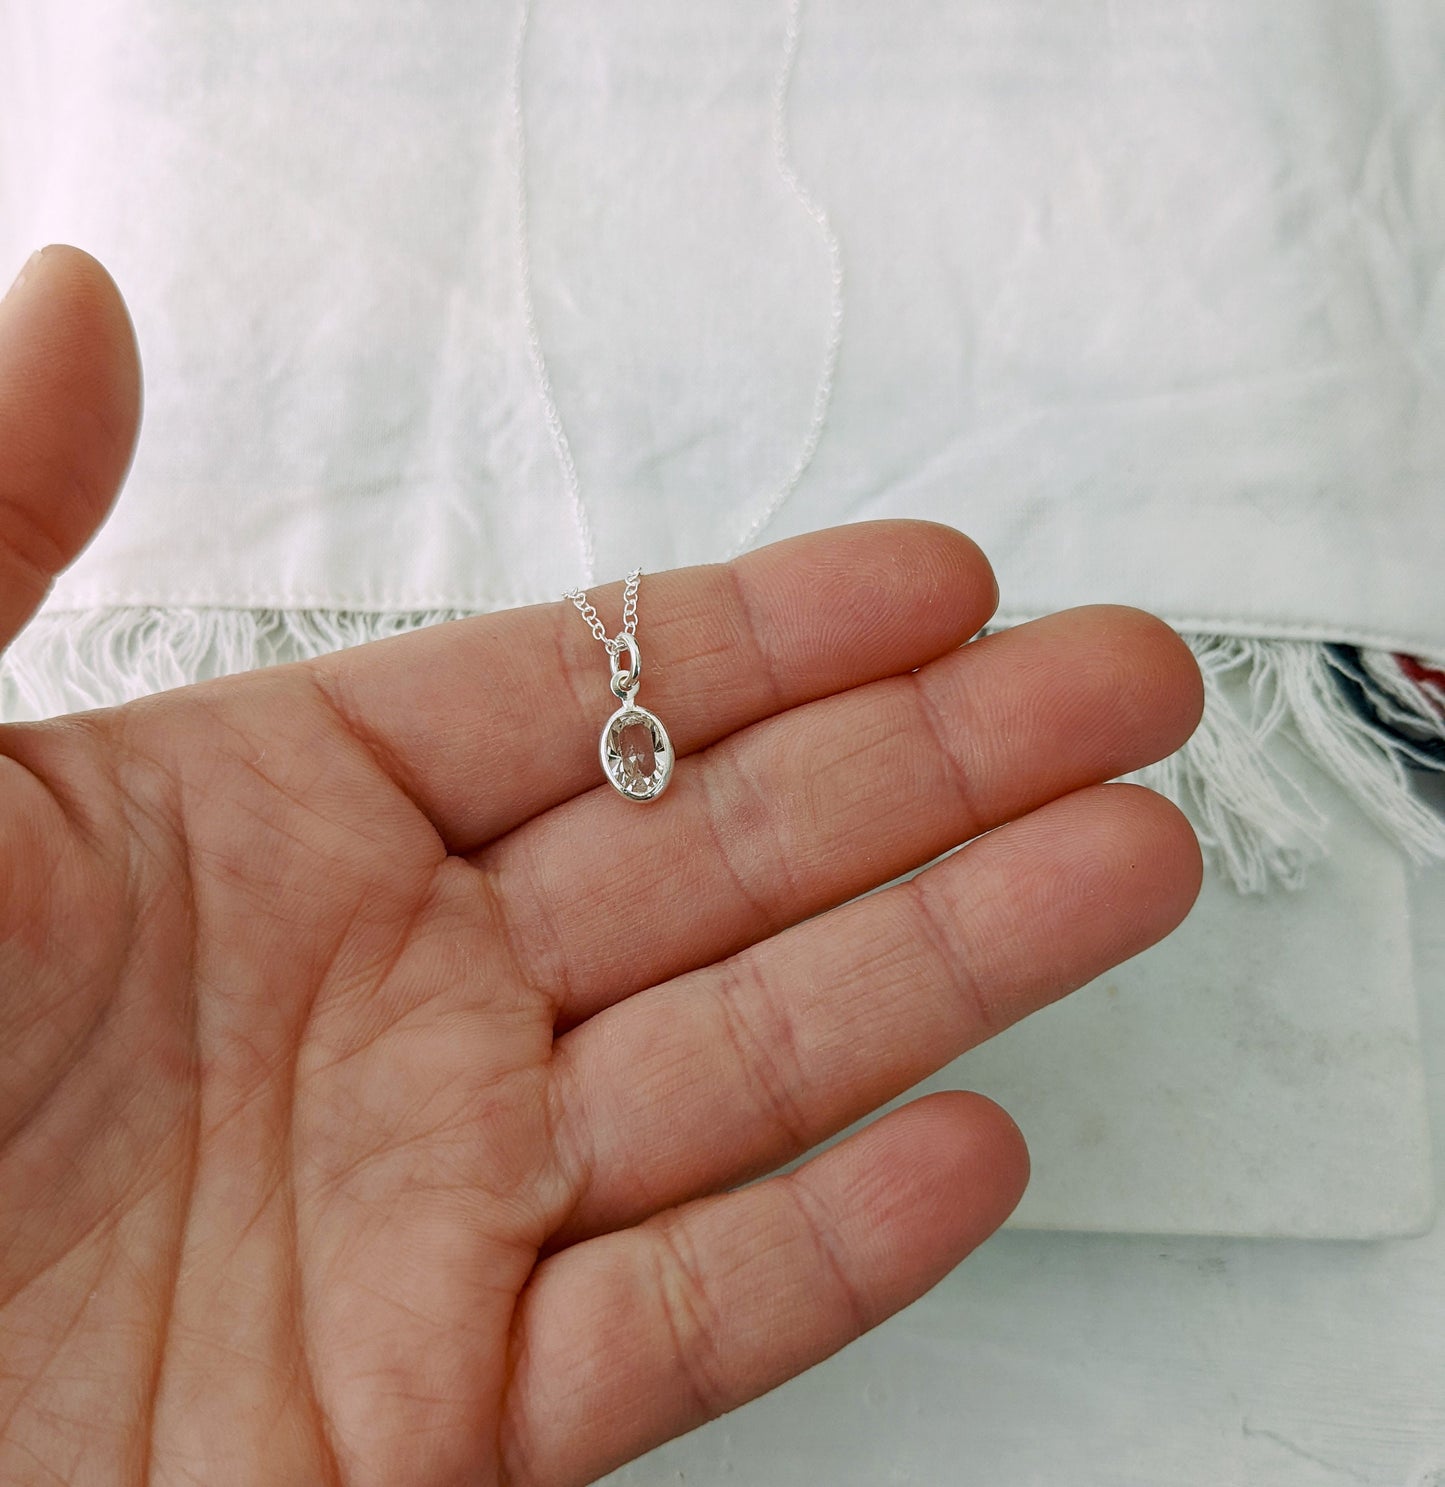 Oval Swarovski Crystal Necklace | Dainty Sterling Silver Jewelry